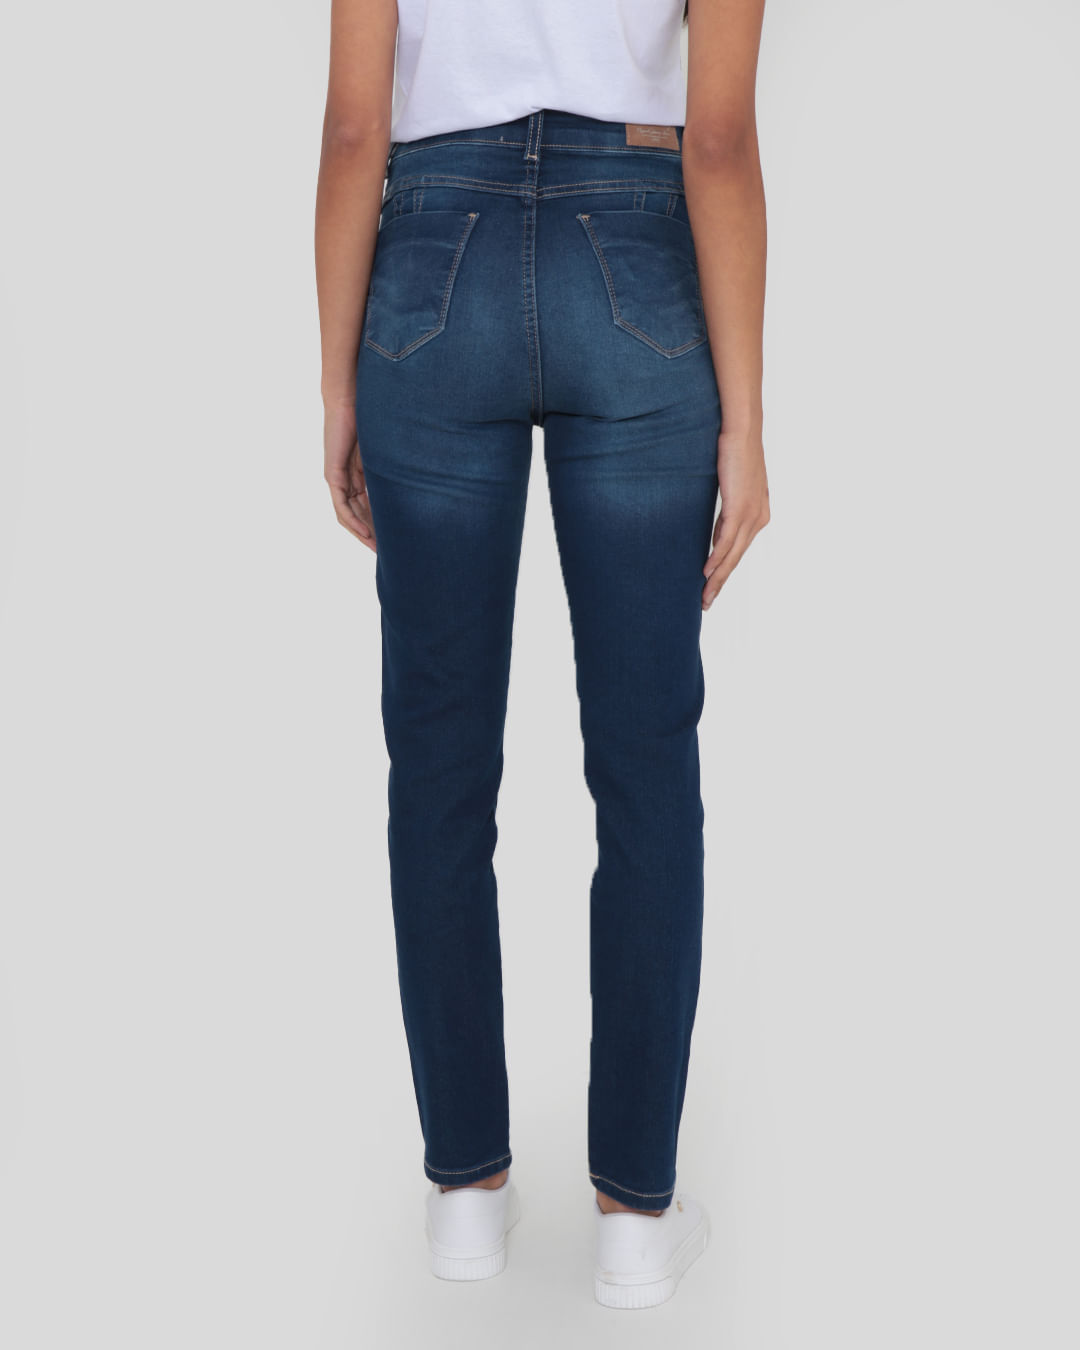 13121001188045-blue-jeans-medio-3